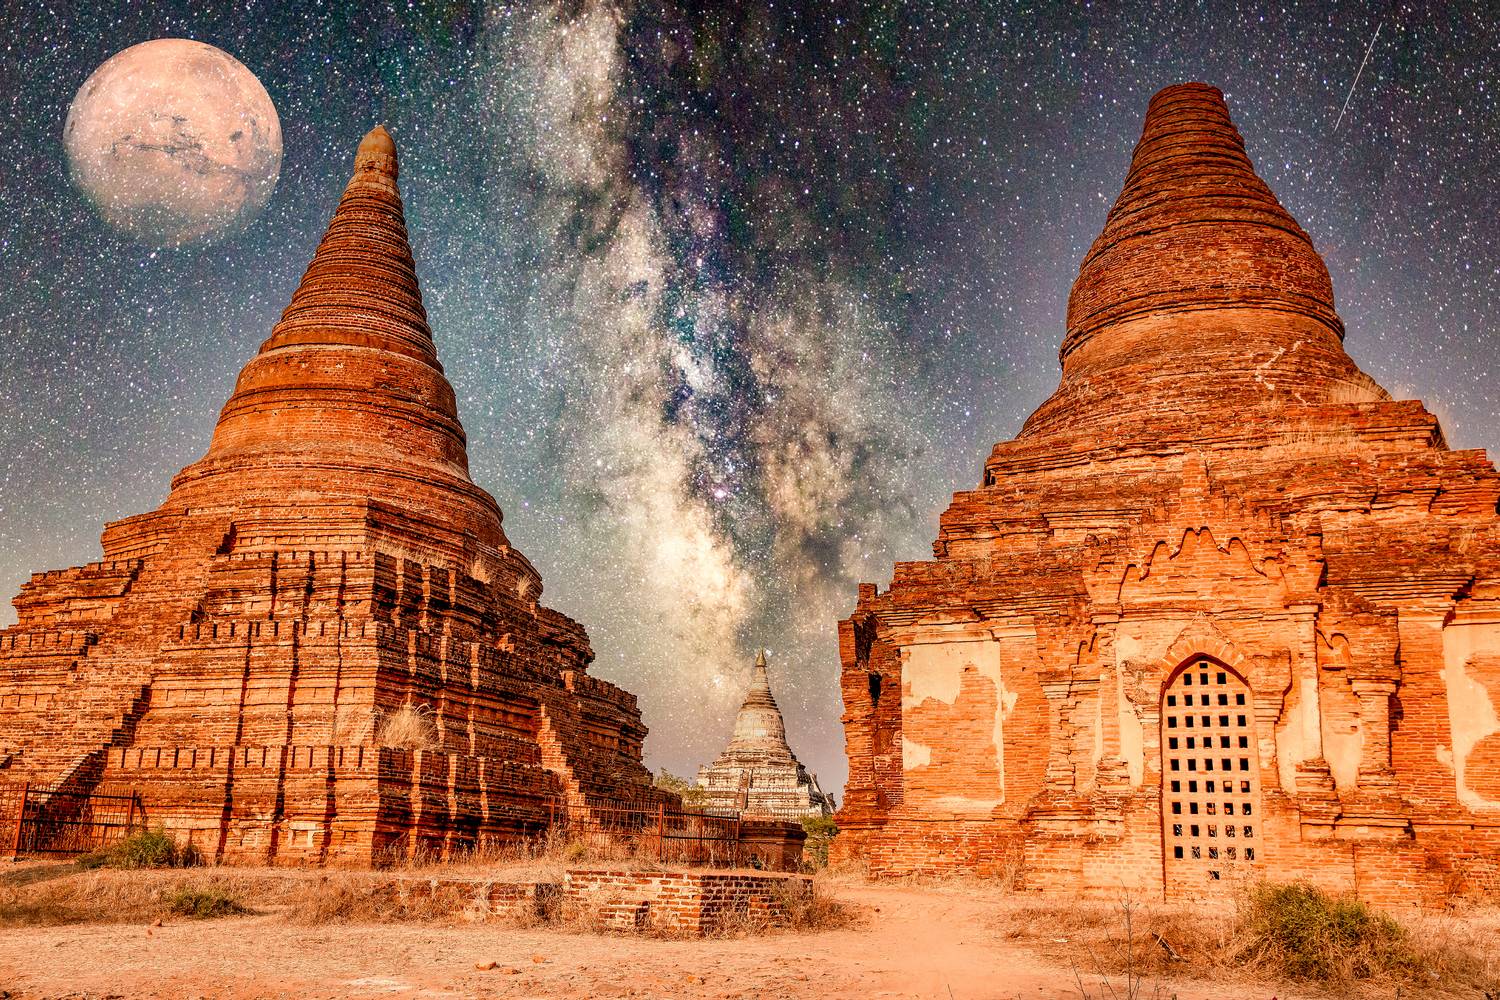 Myanmar in Space, Tempel, Himmel und Mond  à Miro May